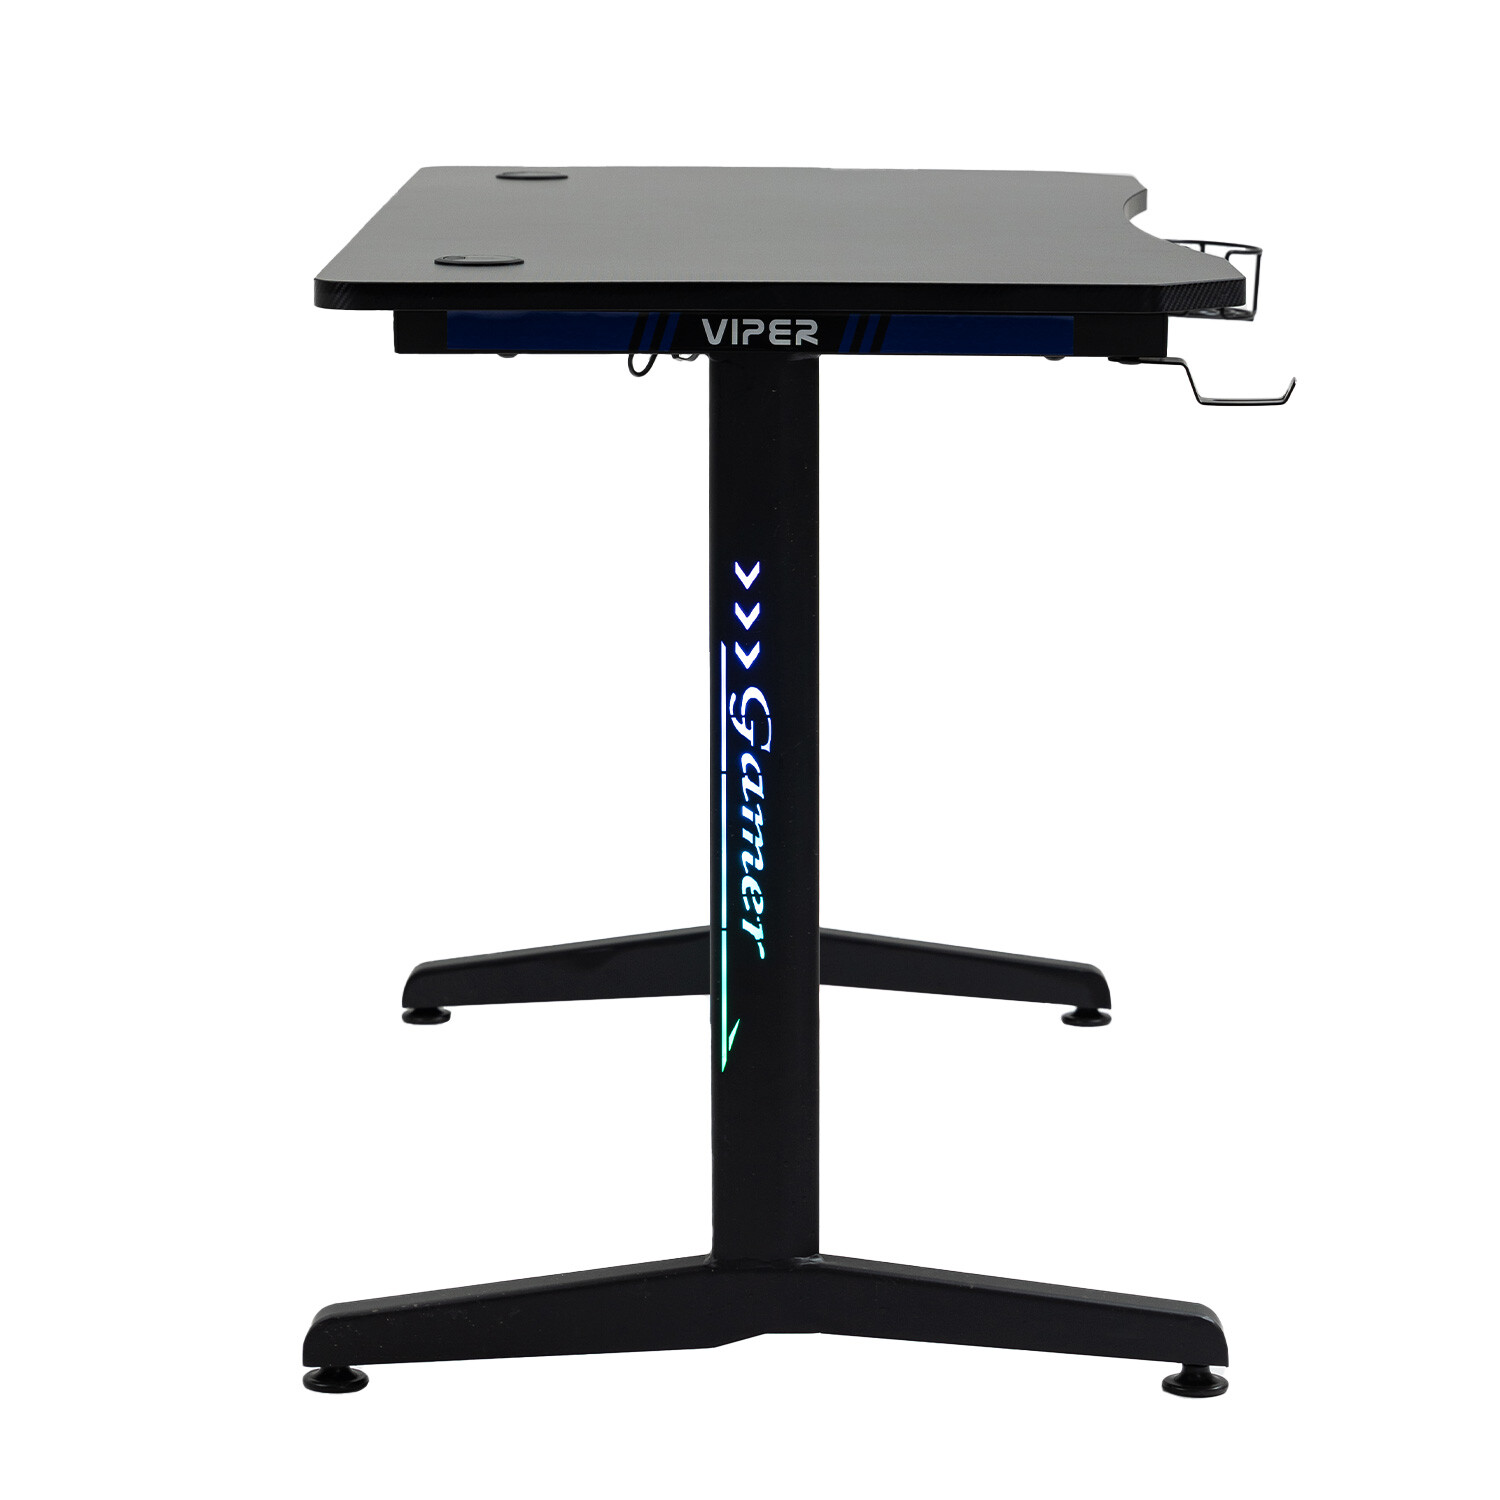 Viper LED Gaming Desk with Cup Holder Black Image 4